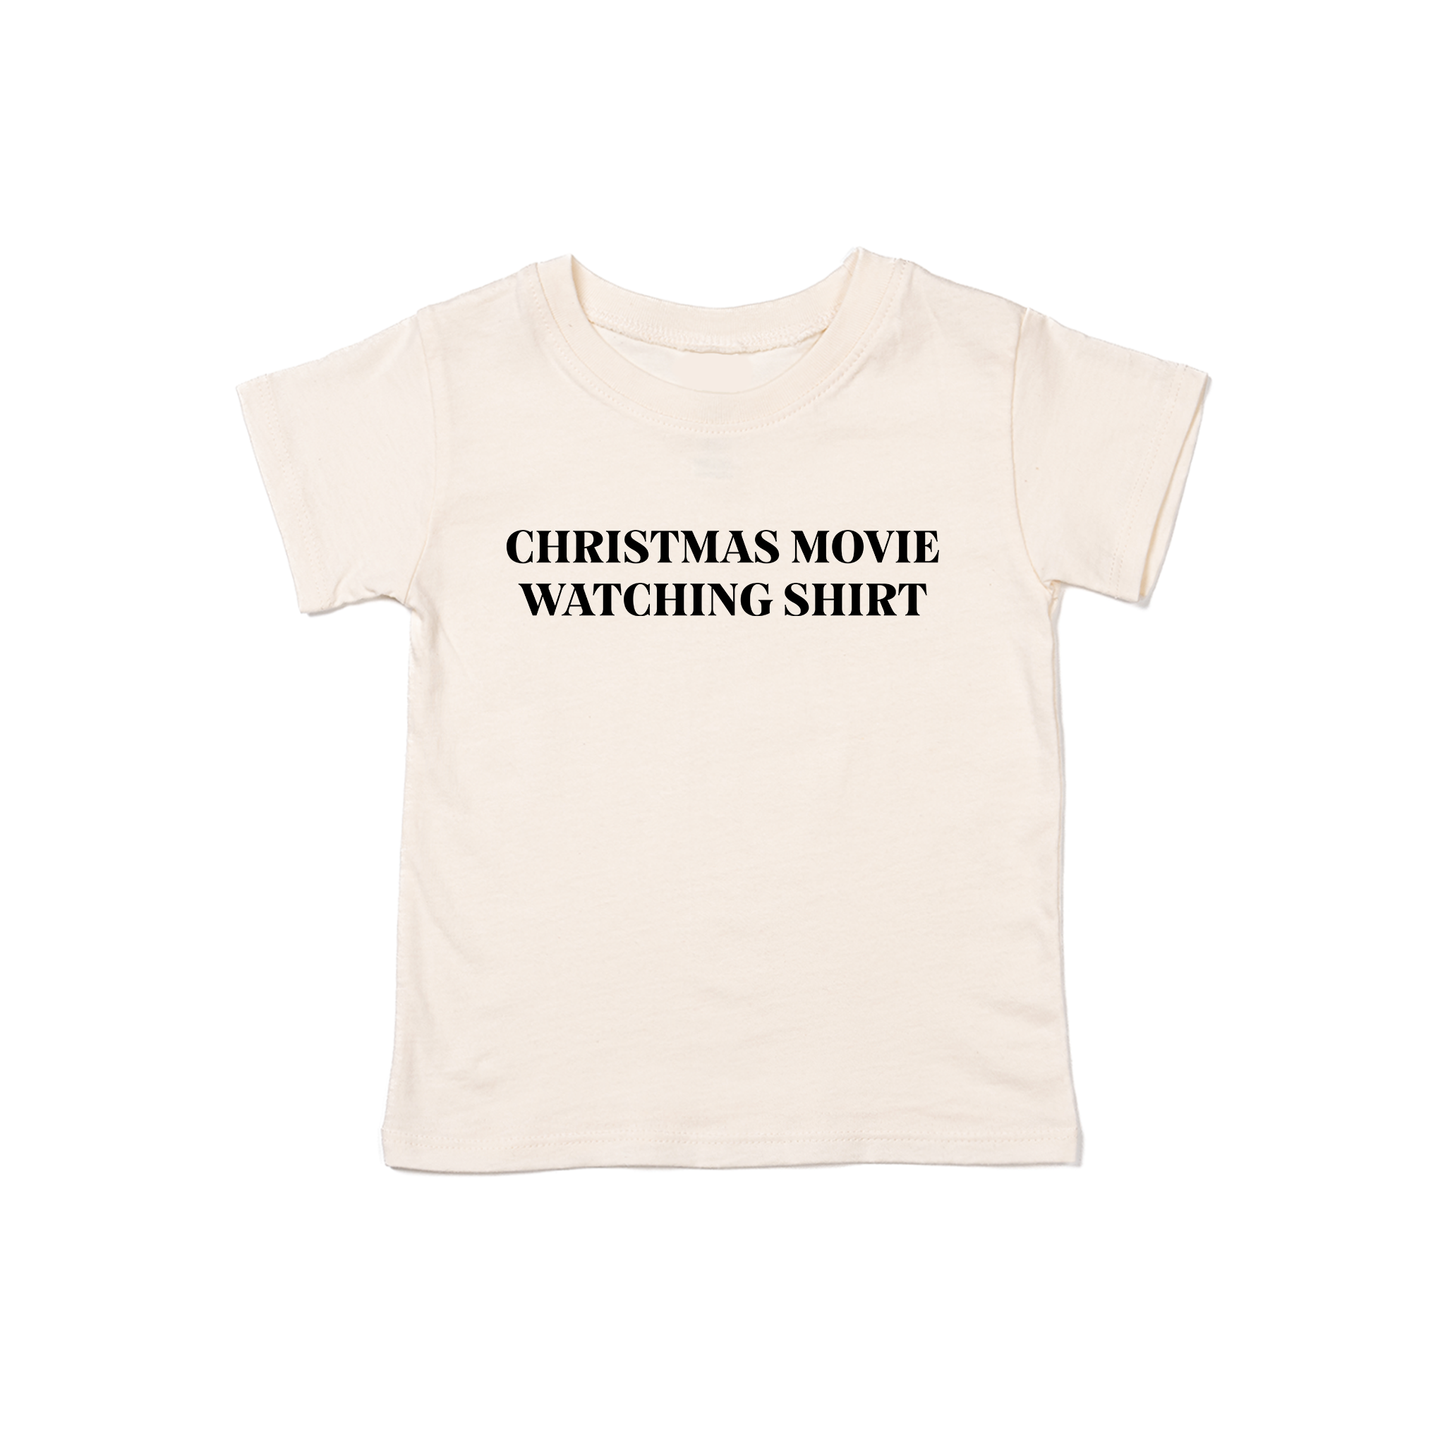 Christmas Movie Watching Shirt (Black) - Kids Tee (Natural)